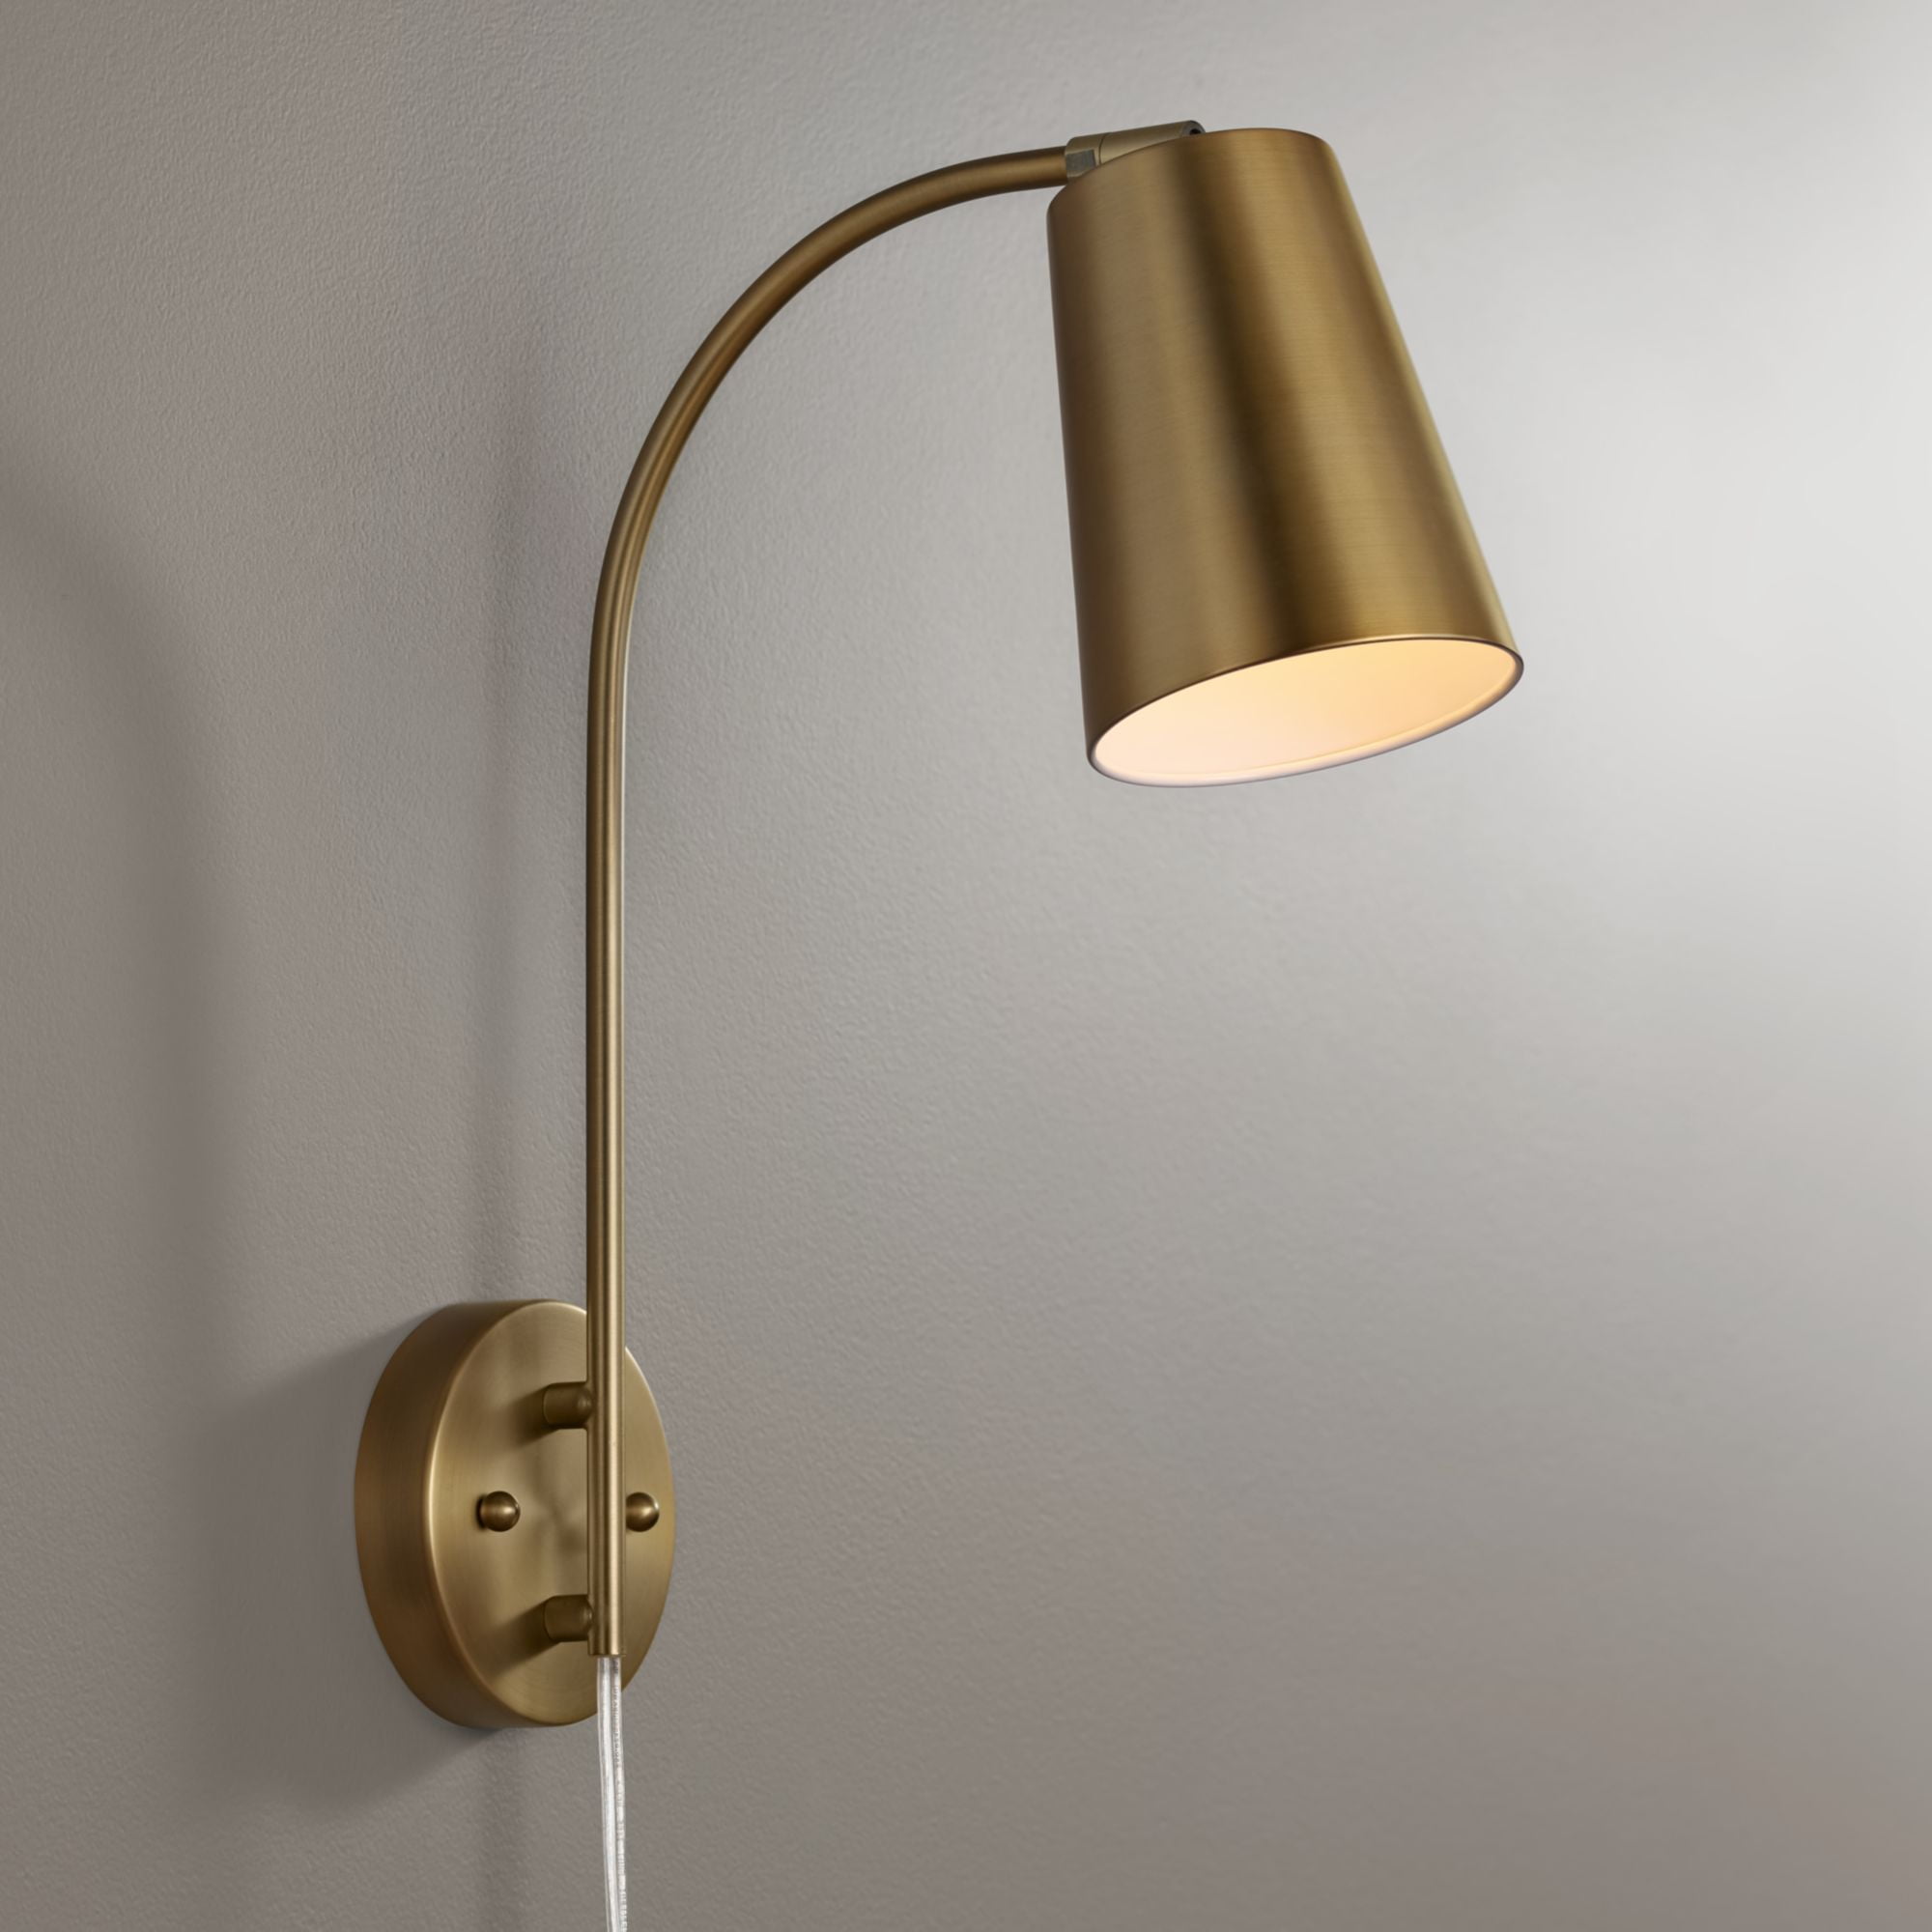 Details about   Modern Wall Lamp Gold Sconce Light Living Room Bedroom Lighting Fixture E27 110V 